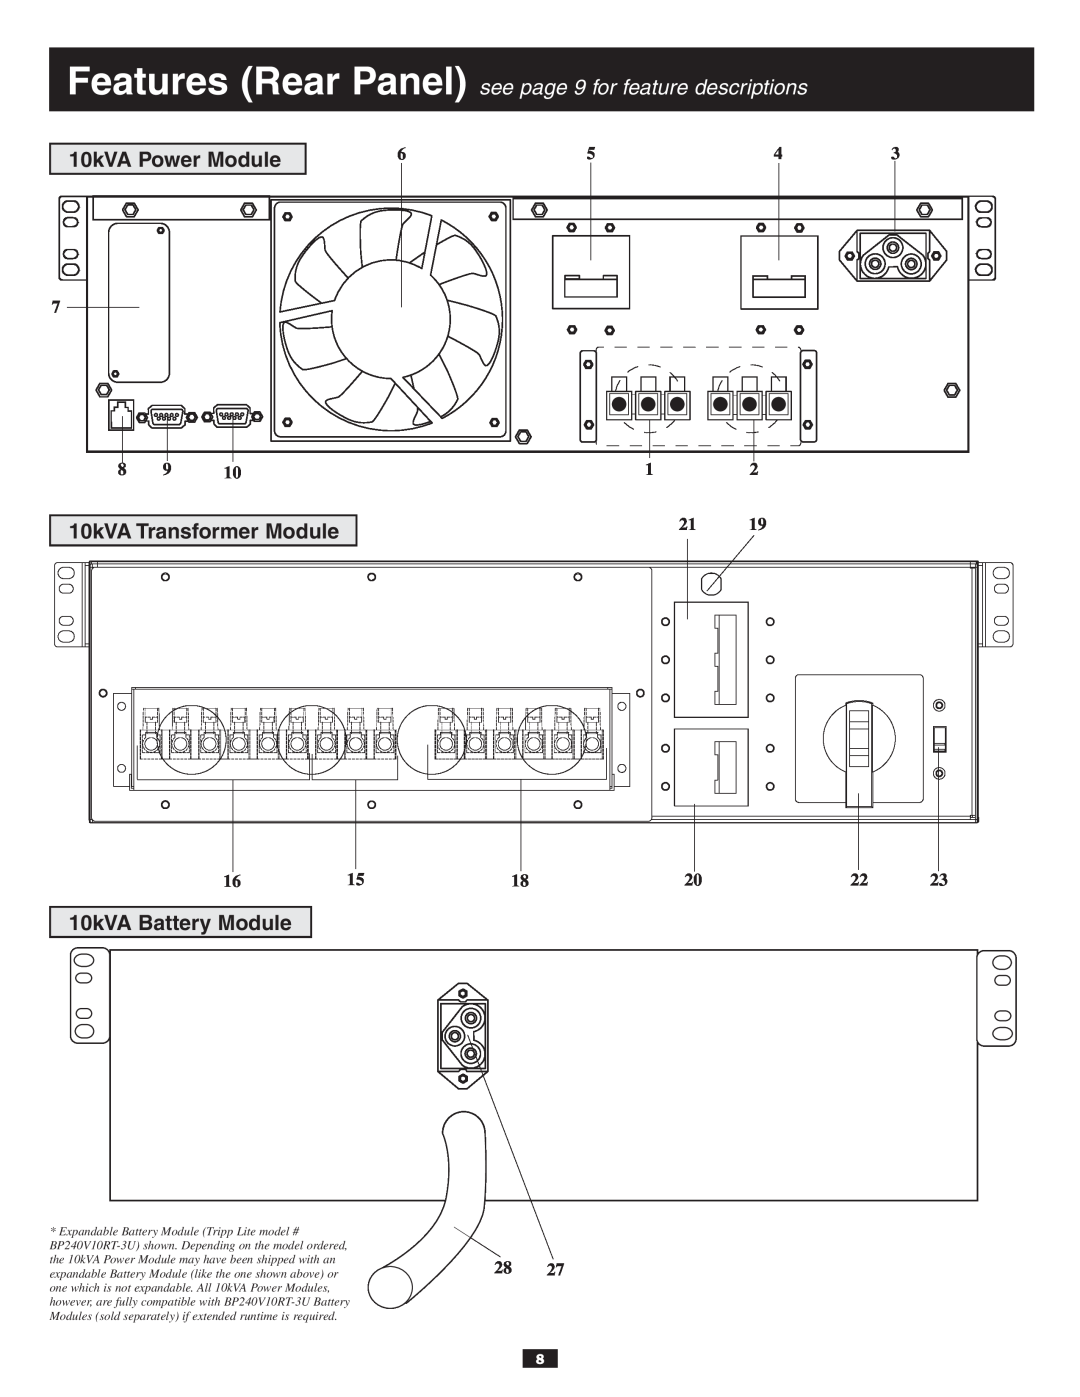 Tripp Lite 10KVA Features Rear Panel see page 9 for feature descriptions, 10kVA Power Module, 10kVA Transformer Module 